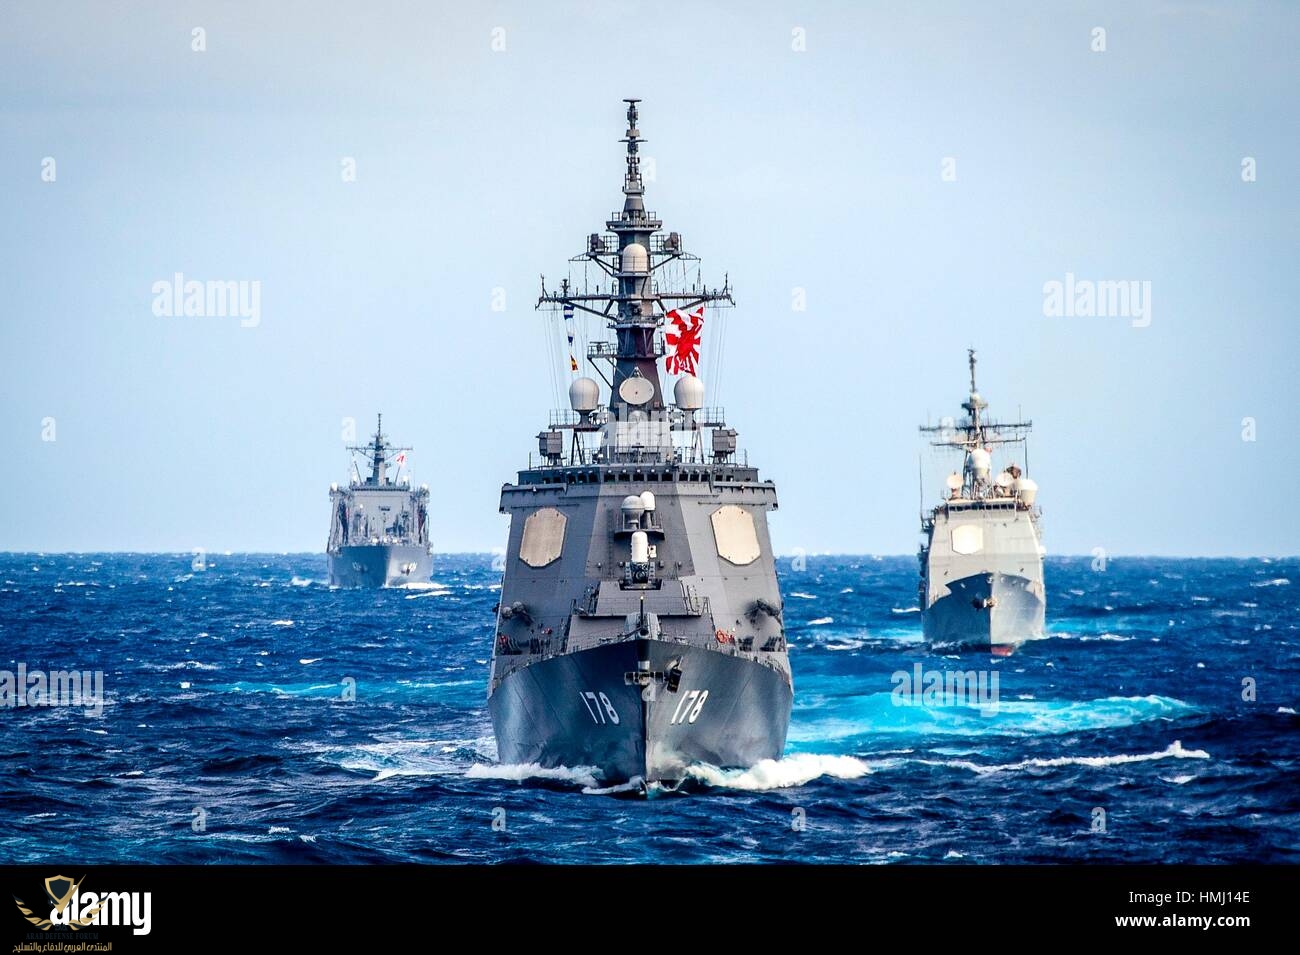 philippine-sea-nov-11-2016-the-japan-maritime-self-defense-force-jmsdf-HMJ14E.jpg